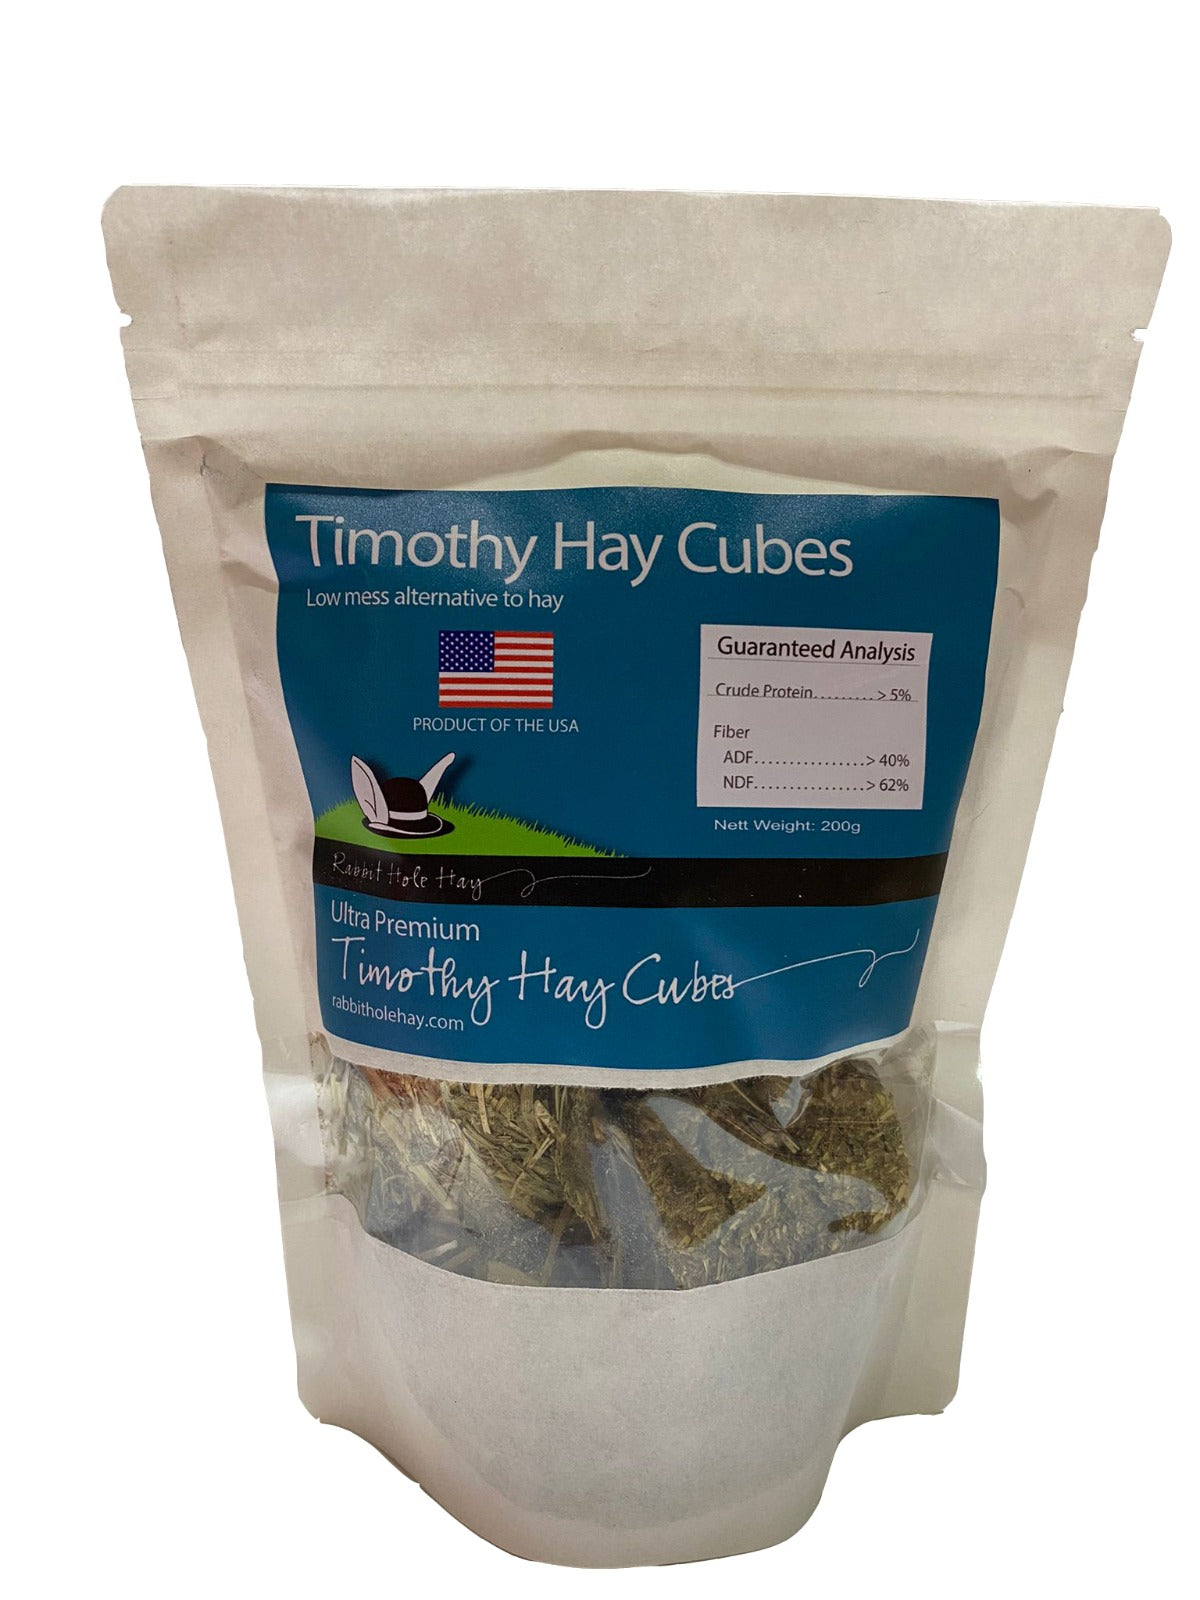 Rabbit Hole Hay Ultra Premium Timothy Hay Cubes 200g